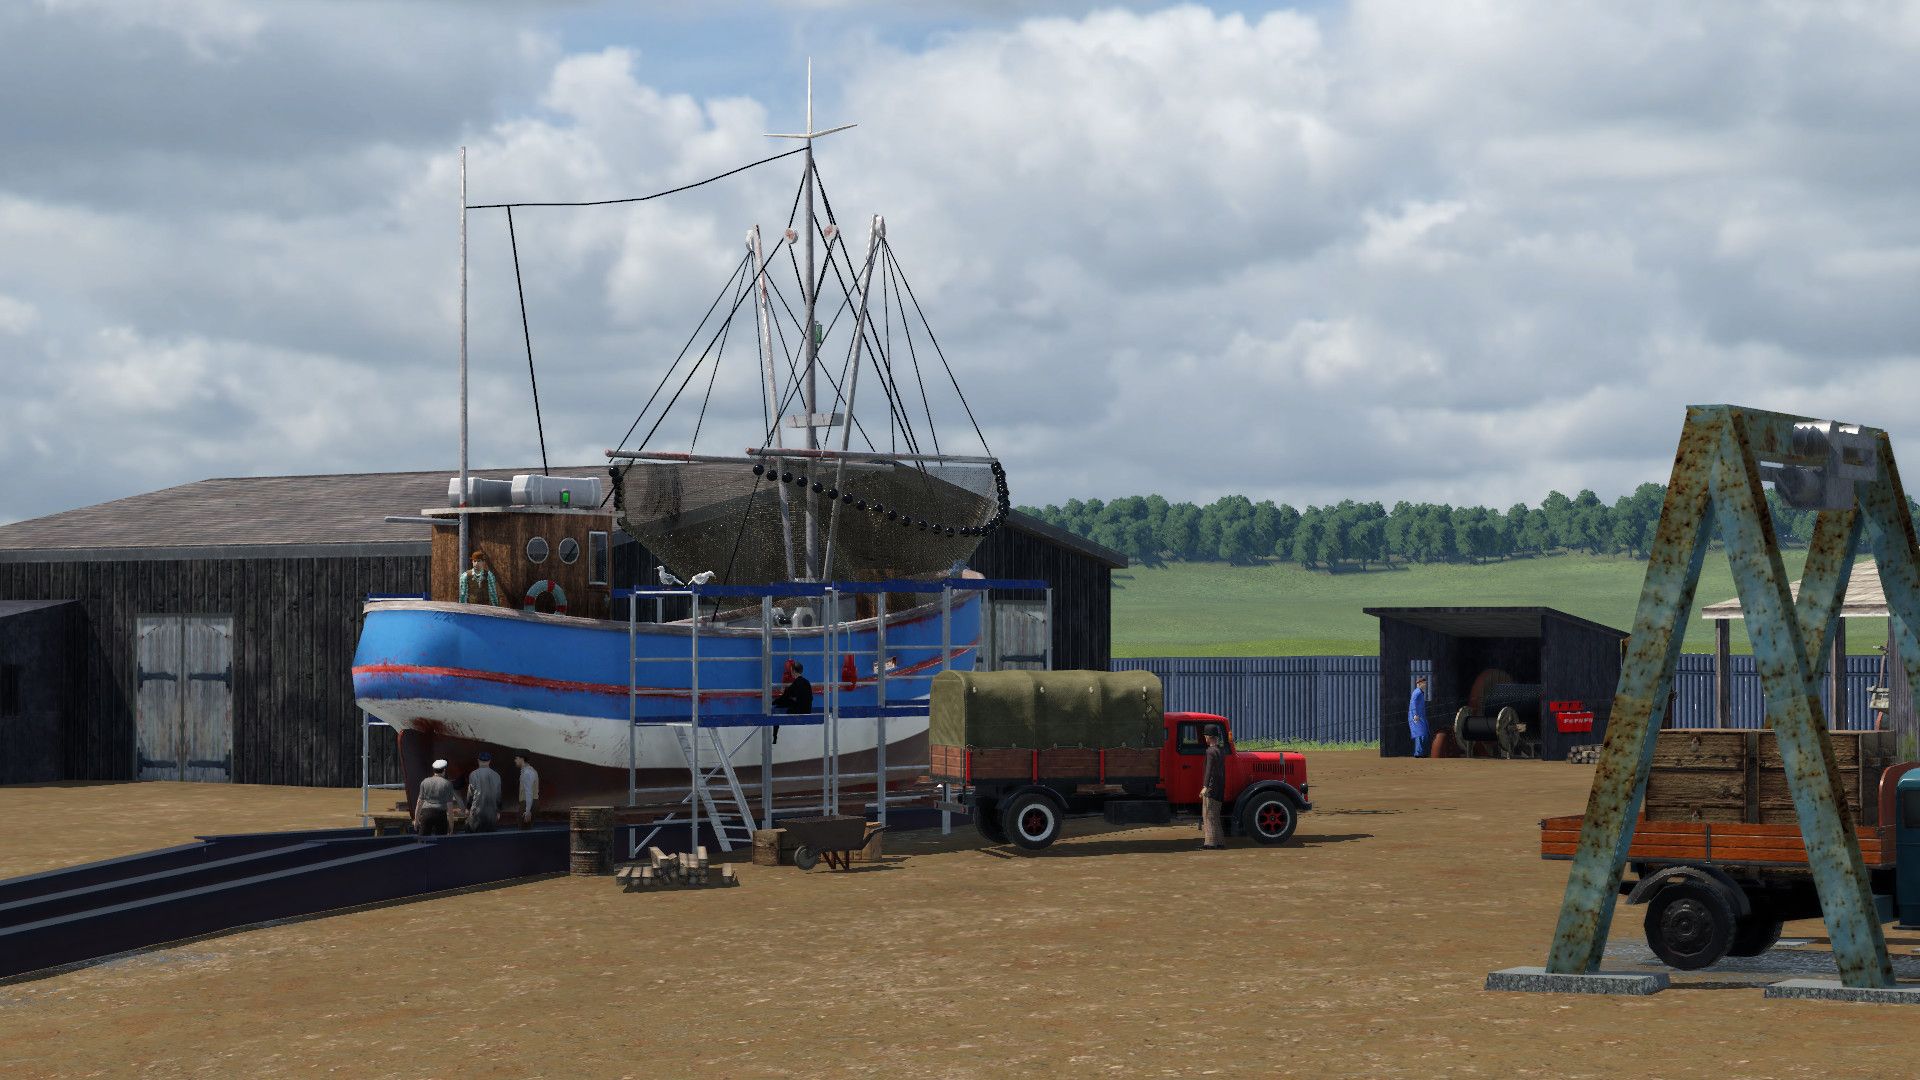 Thamsens Bootswerft